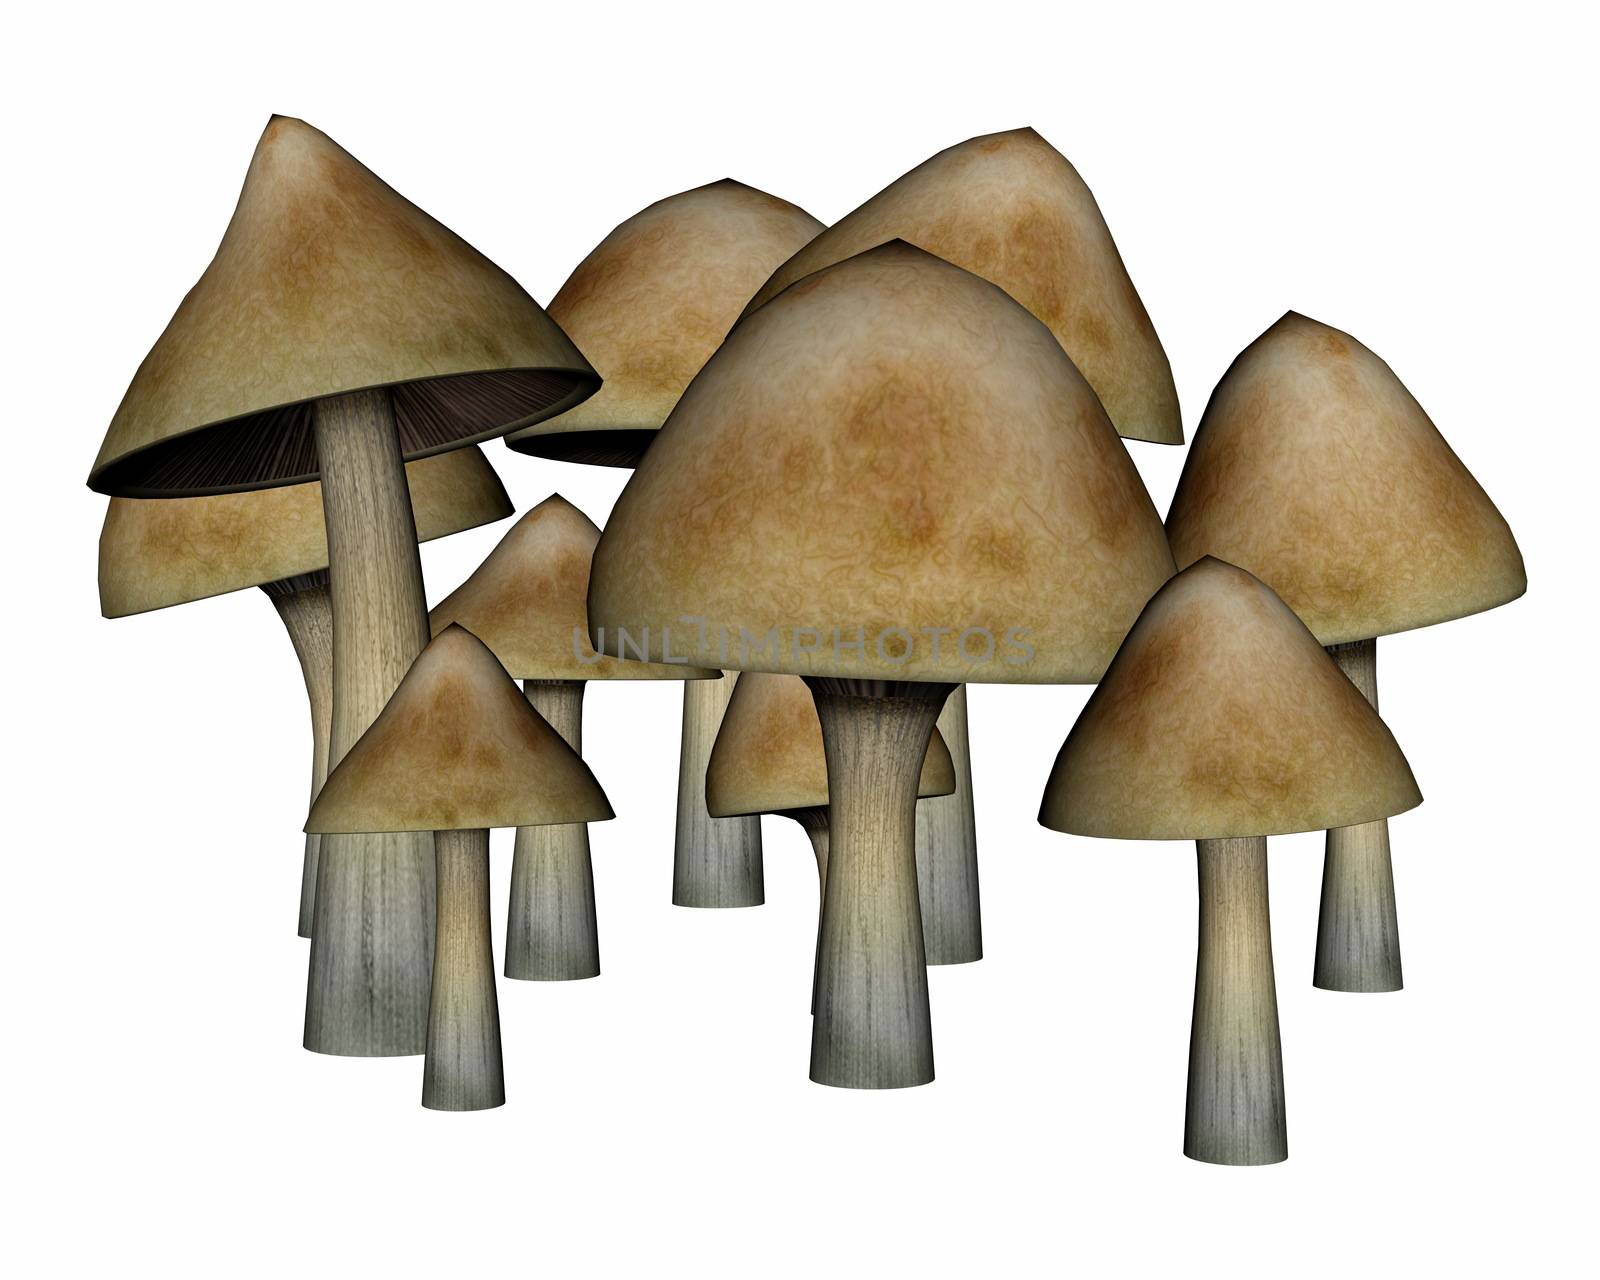 Common mushrooms - 3D render by Elenaphotos21